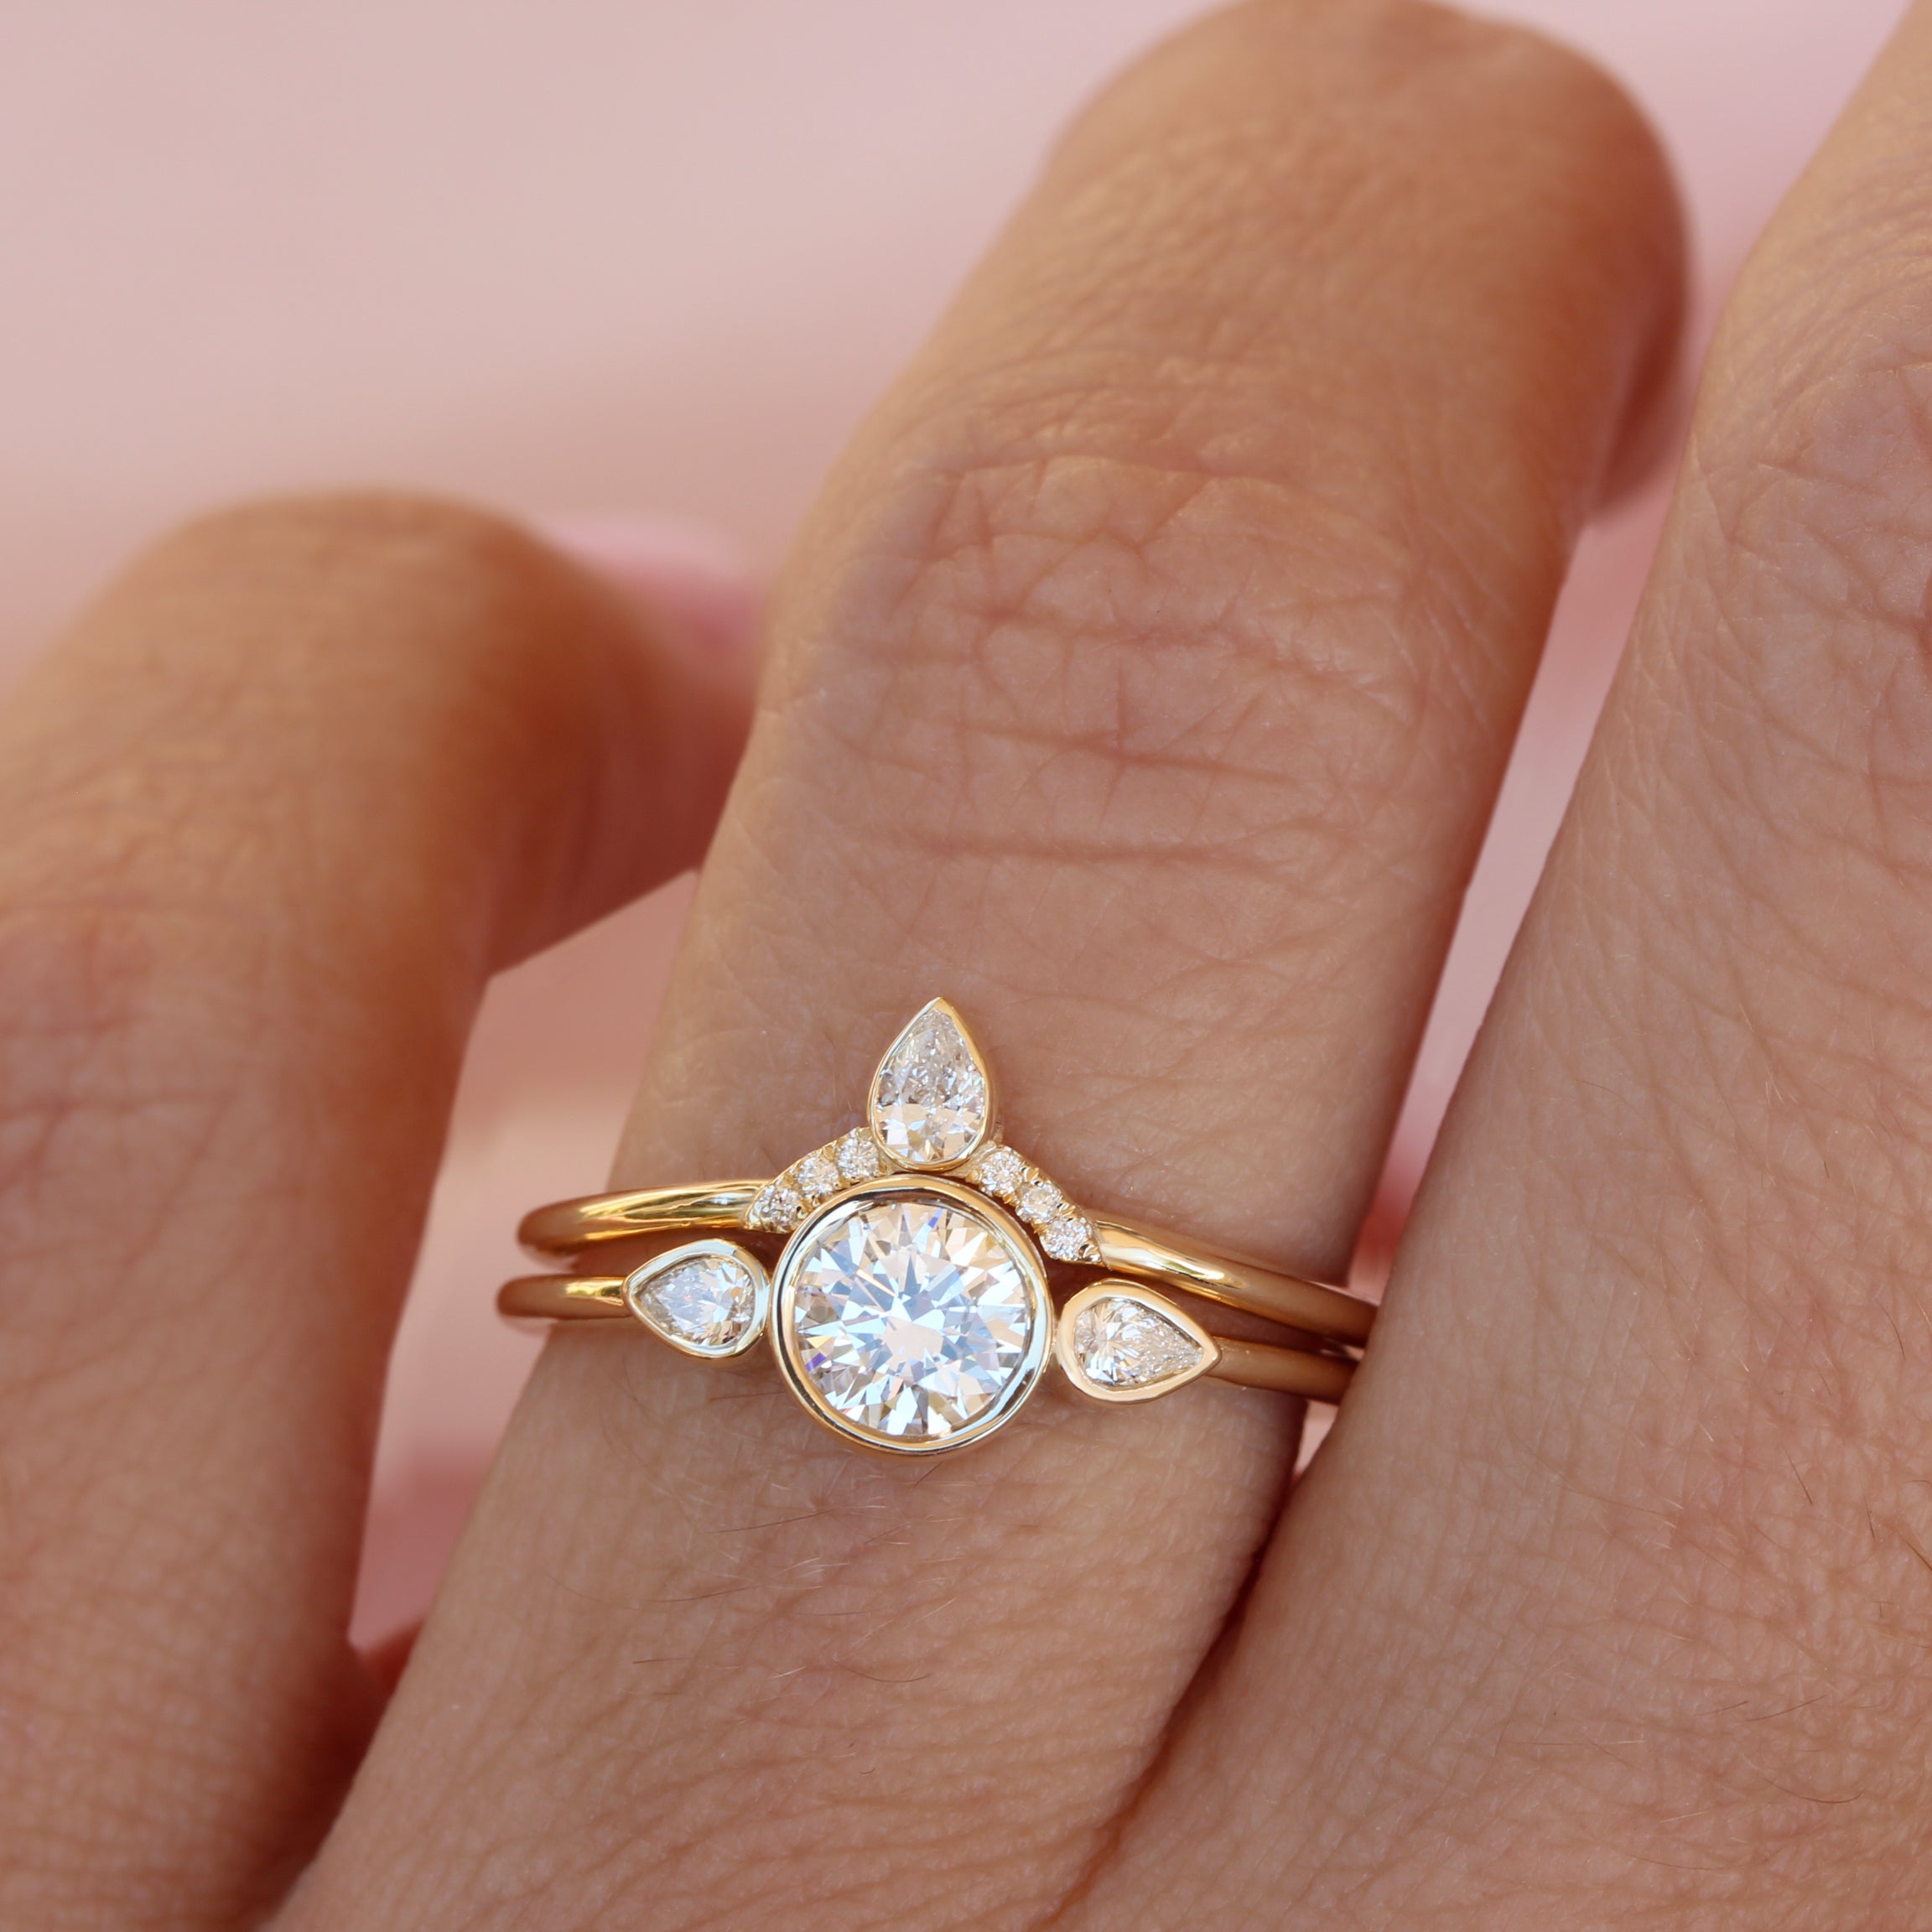 Three stone Engagement Diamond Bezel Ring Set - 14K Yellow Gold, Size 7, READY TO SHIP!